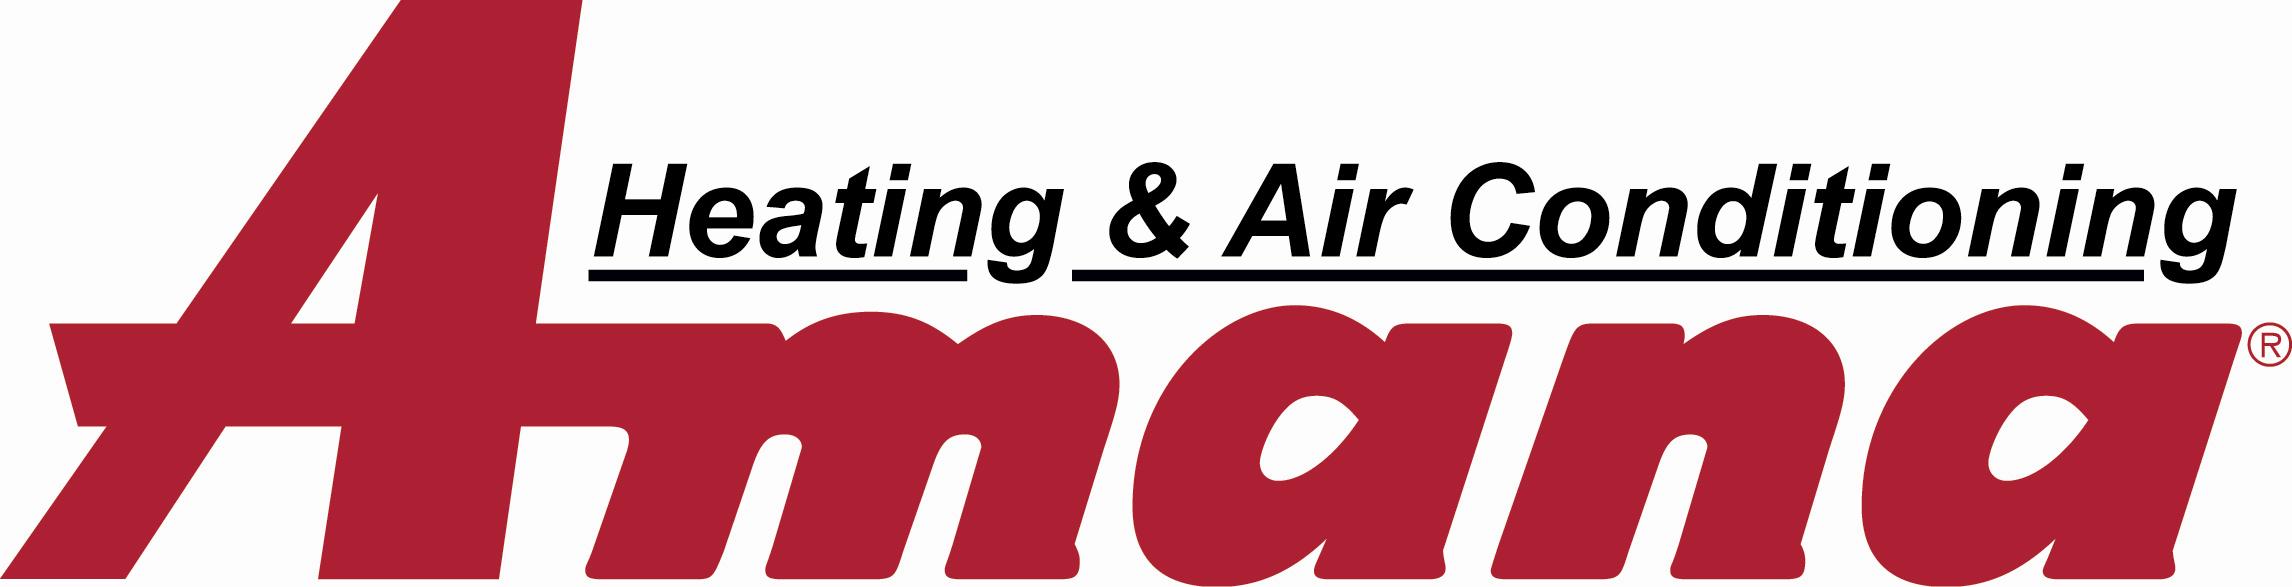 Amana Air Conditioning logo